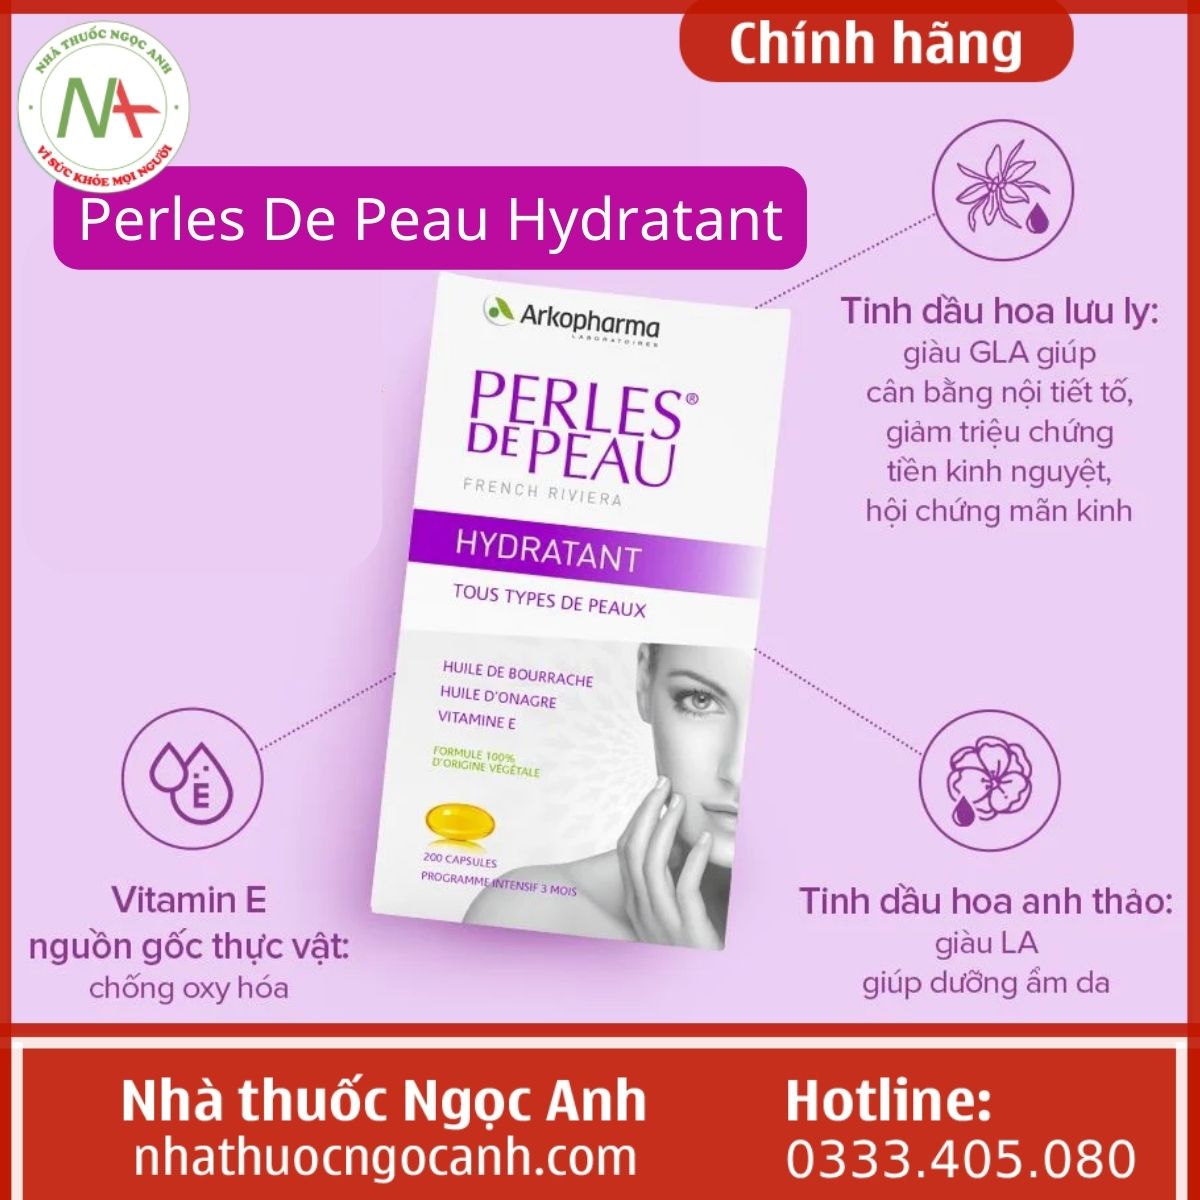 Perles De Peau Hydratant dưỡng da, điều hòa kinh nguyệt